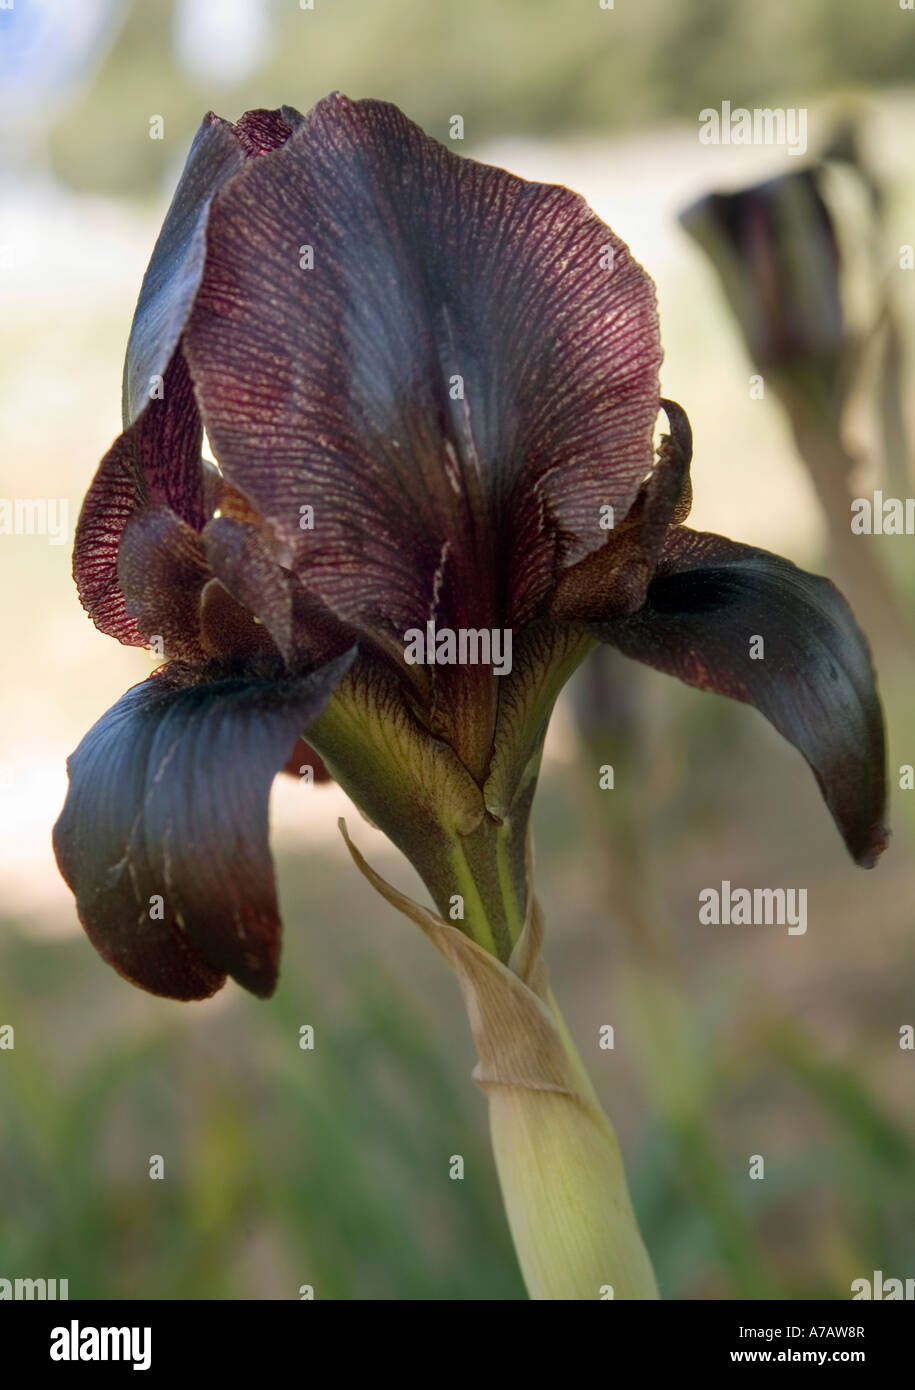 Jordania, Iris negro, la flor nacional Fotografía de stock - Alamy